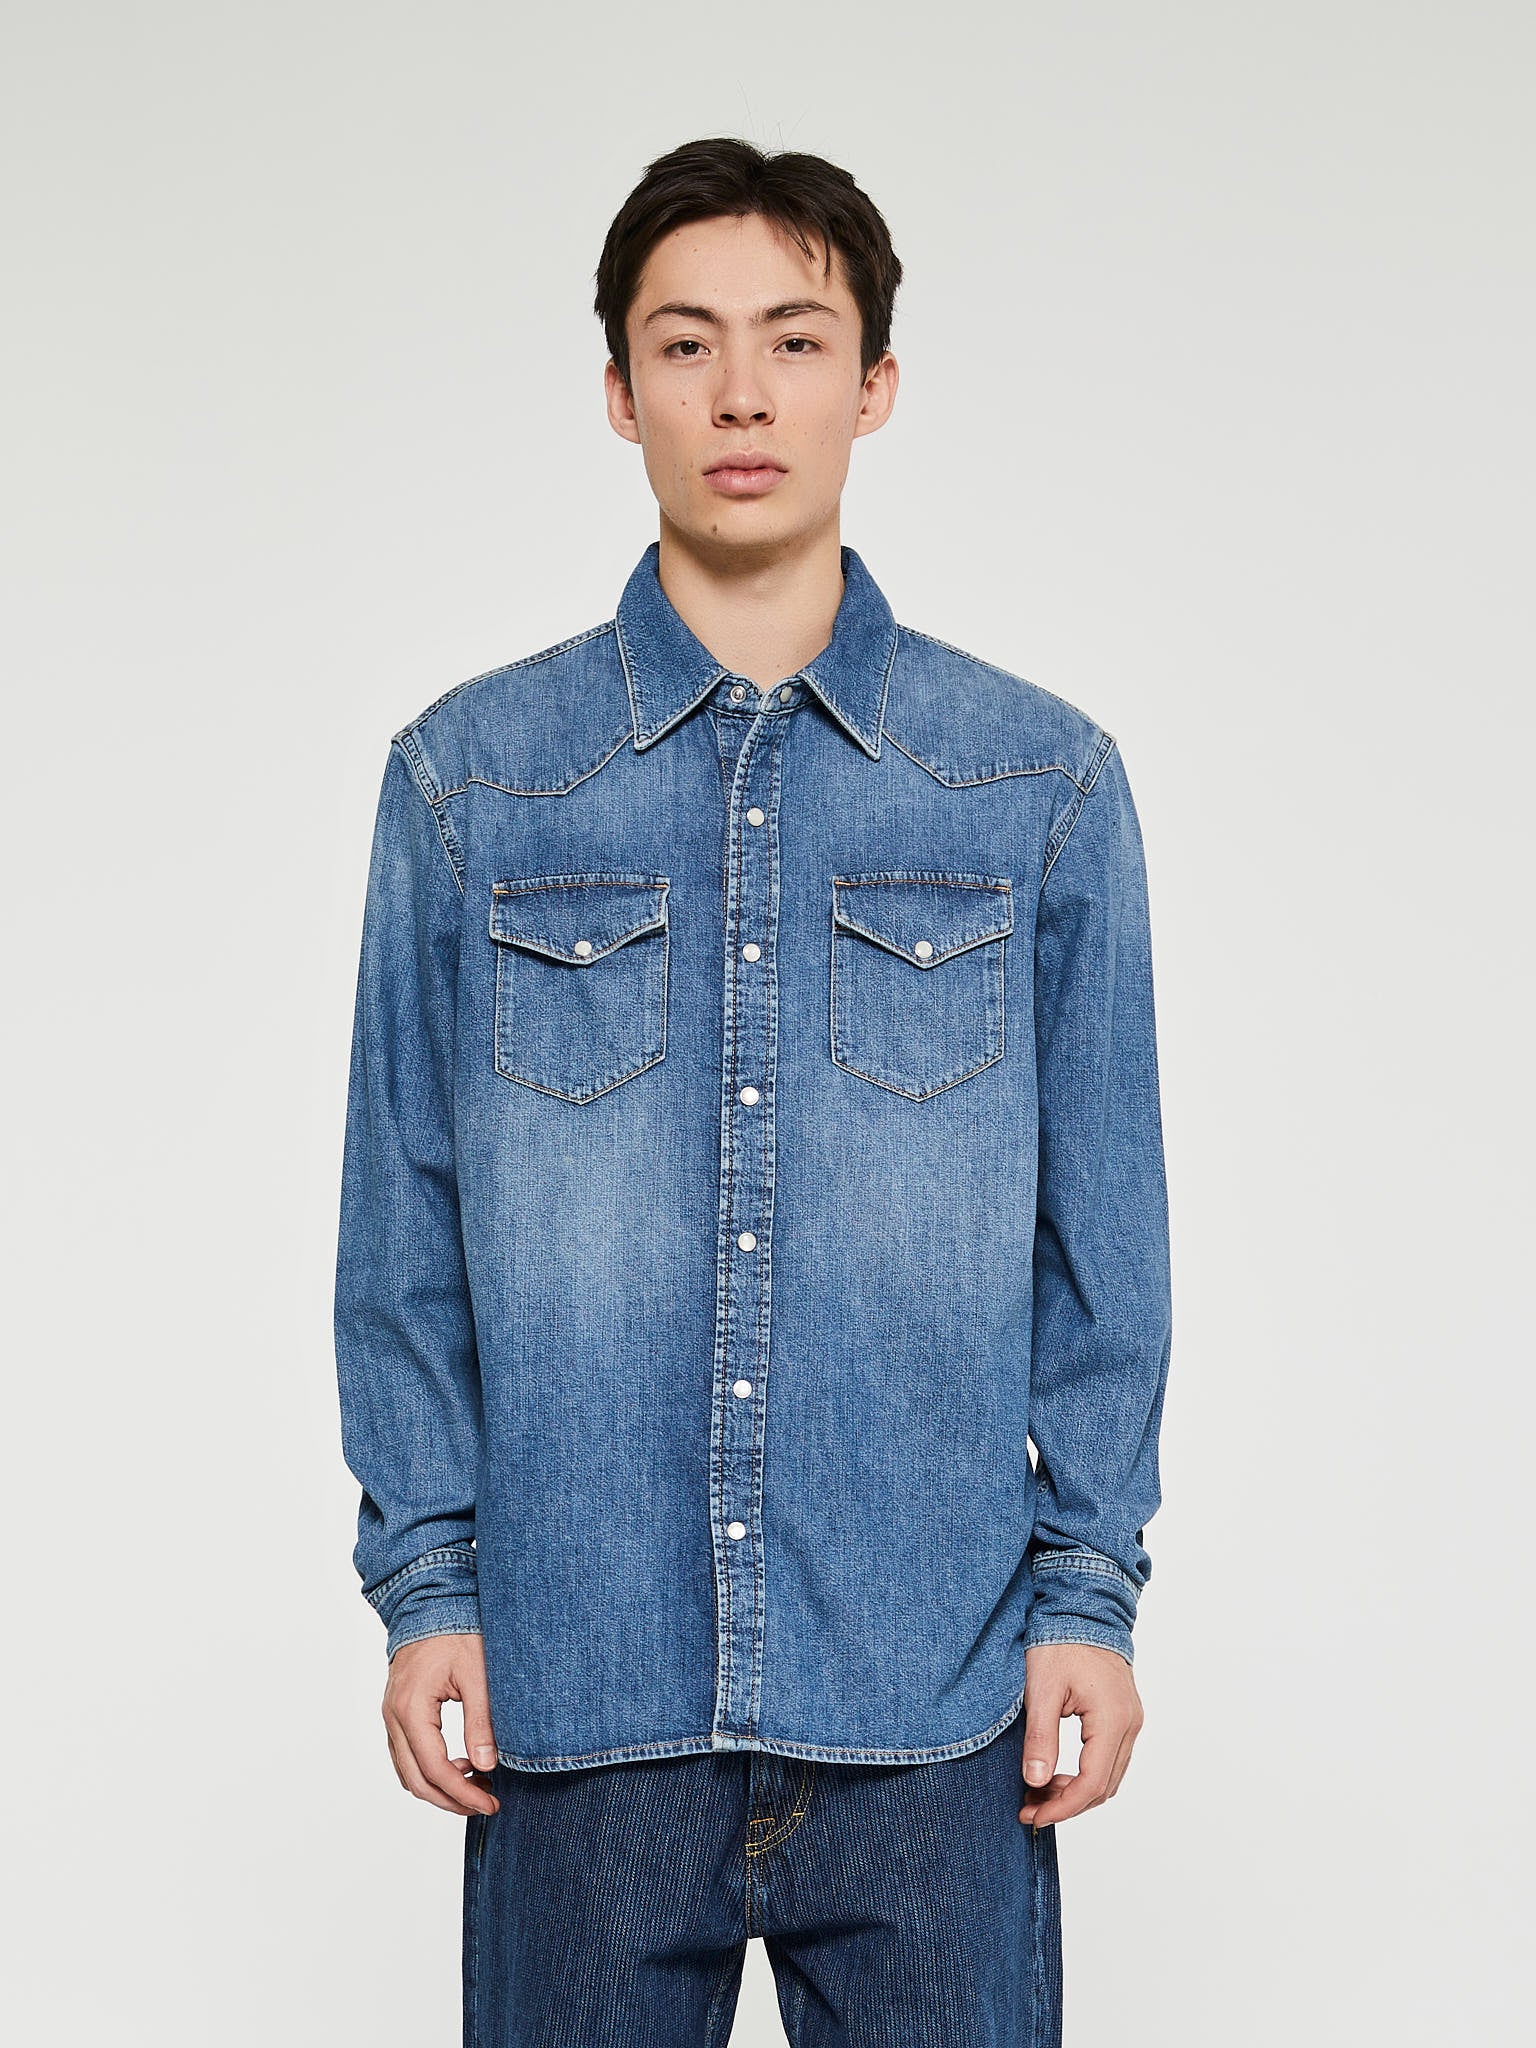 Acne Studios - Denim Button-Up Shirt in Mid Blue